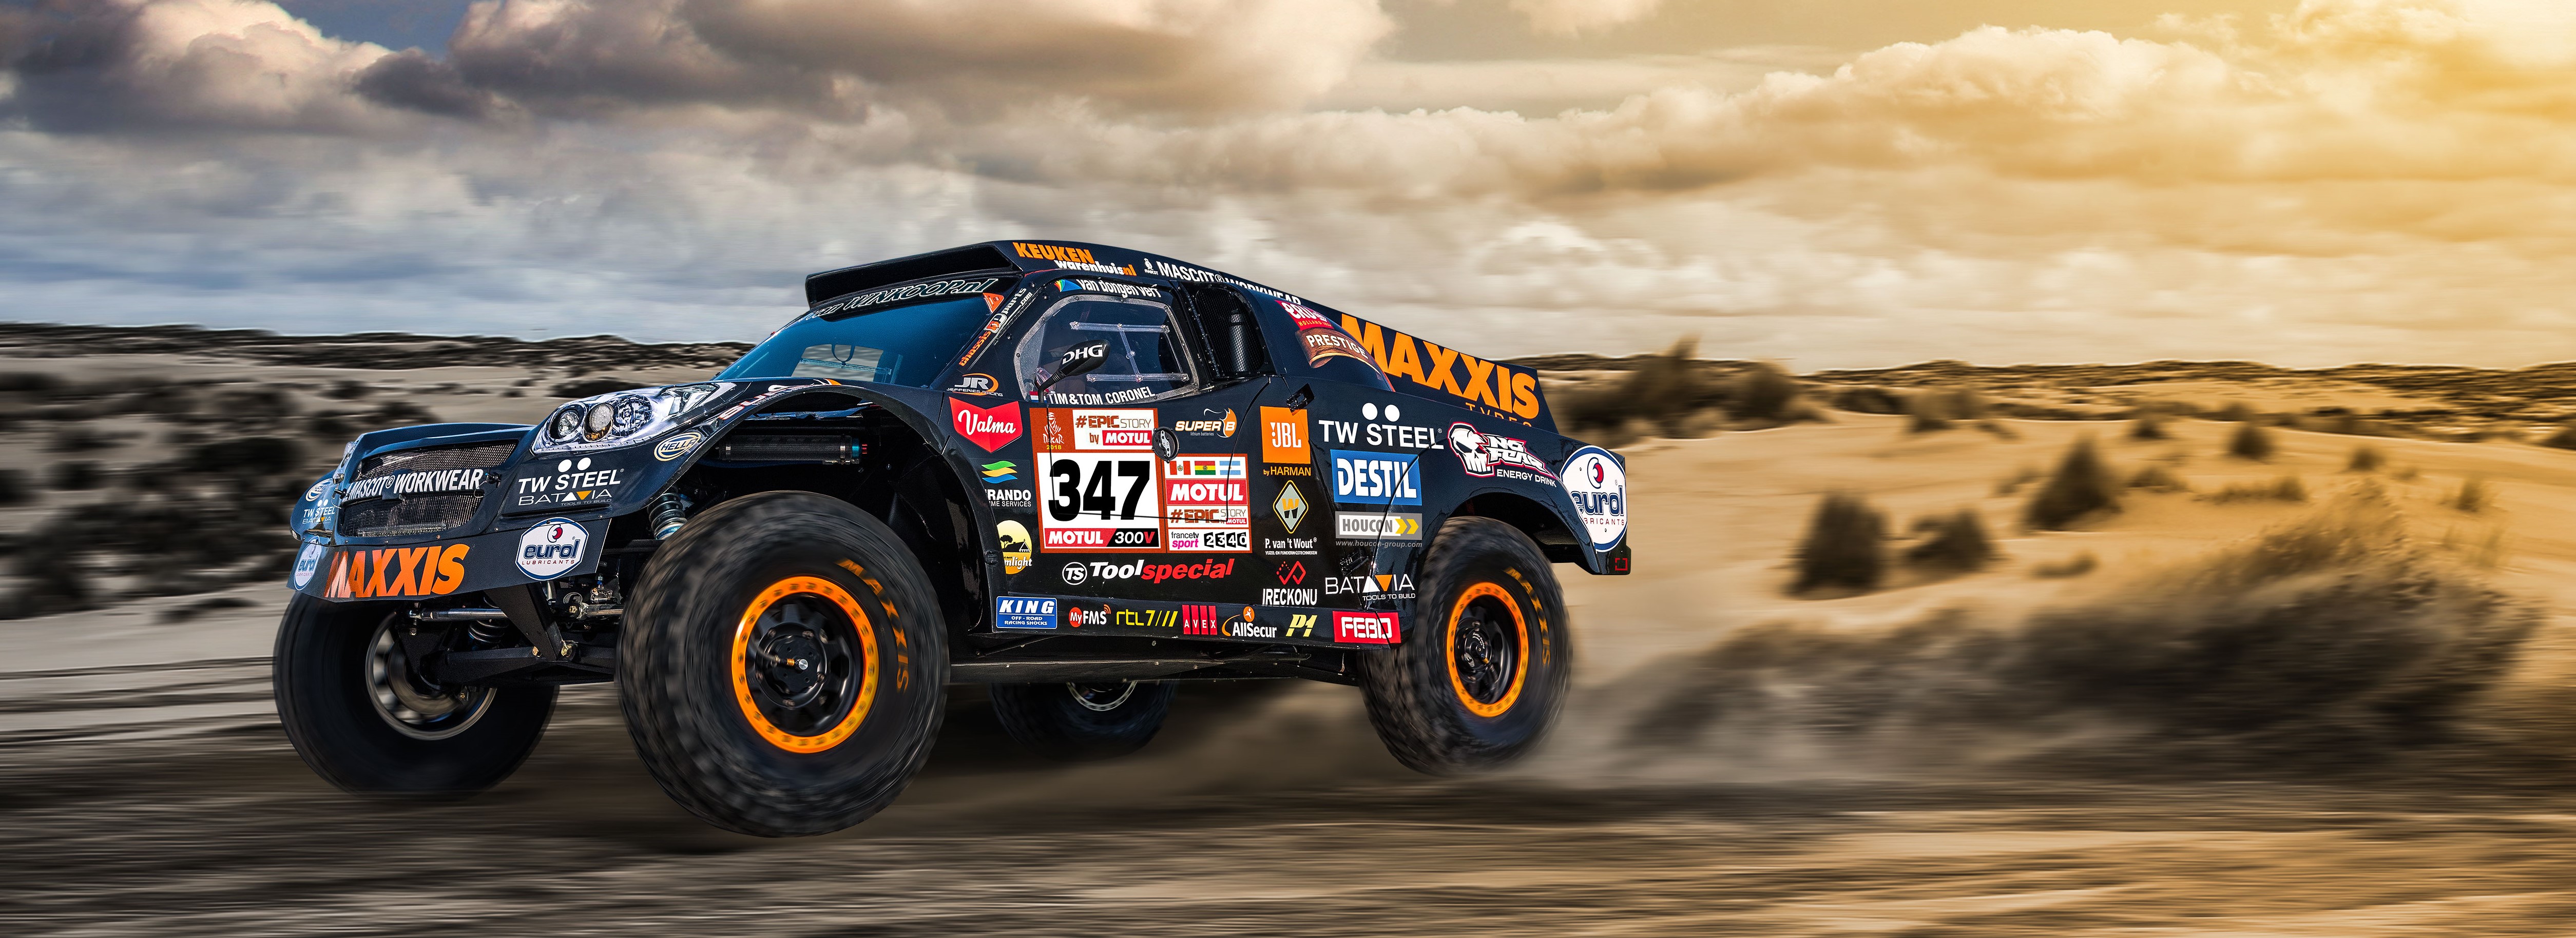 Maxxis confirms title Sponsorship for Maxxis Dakar Team